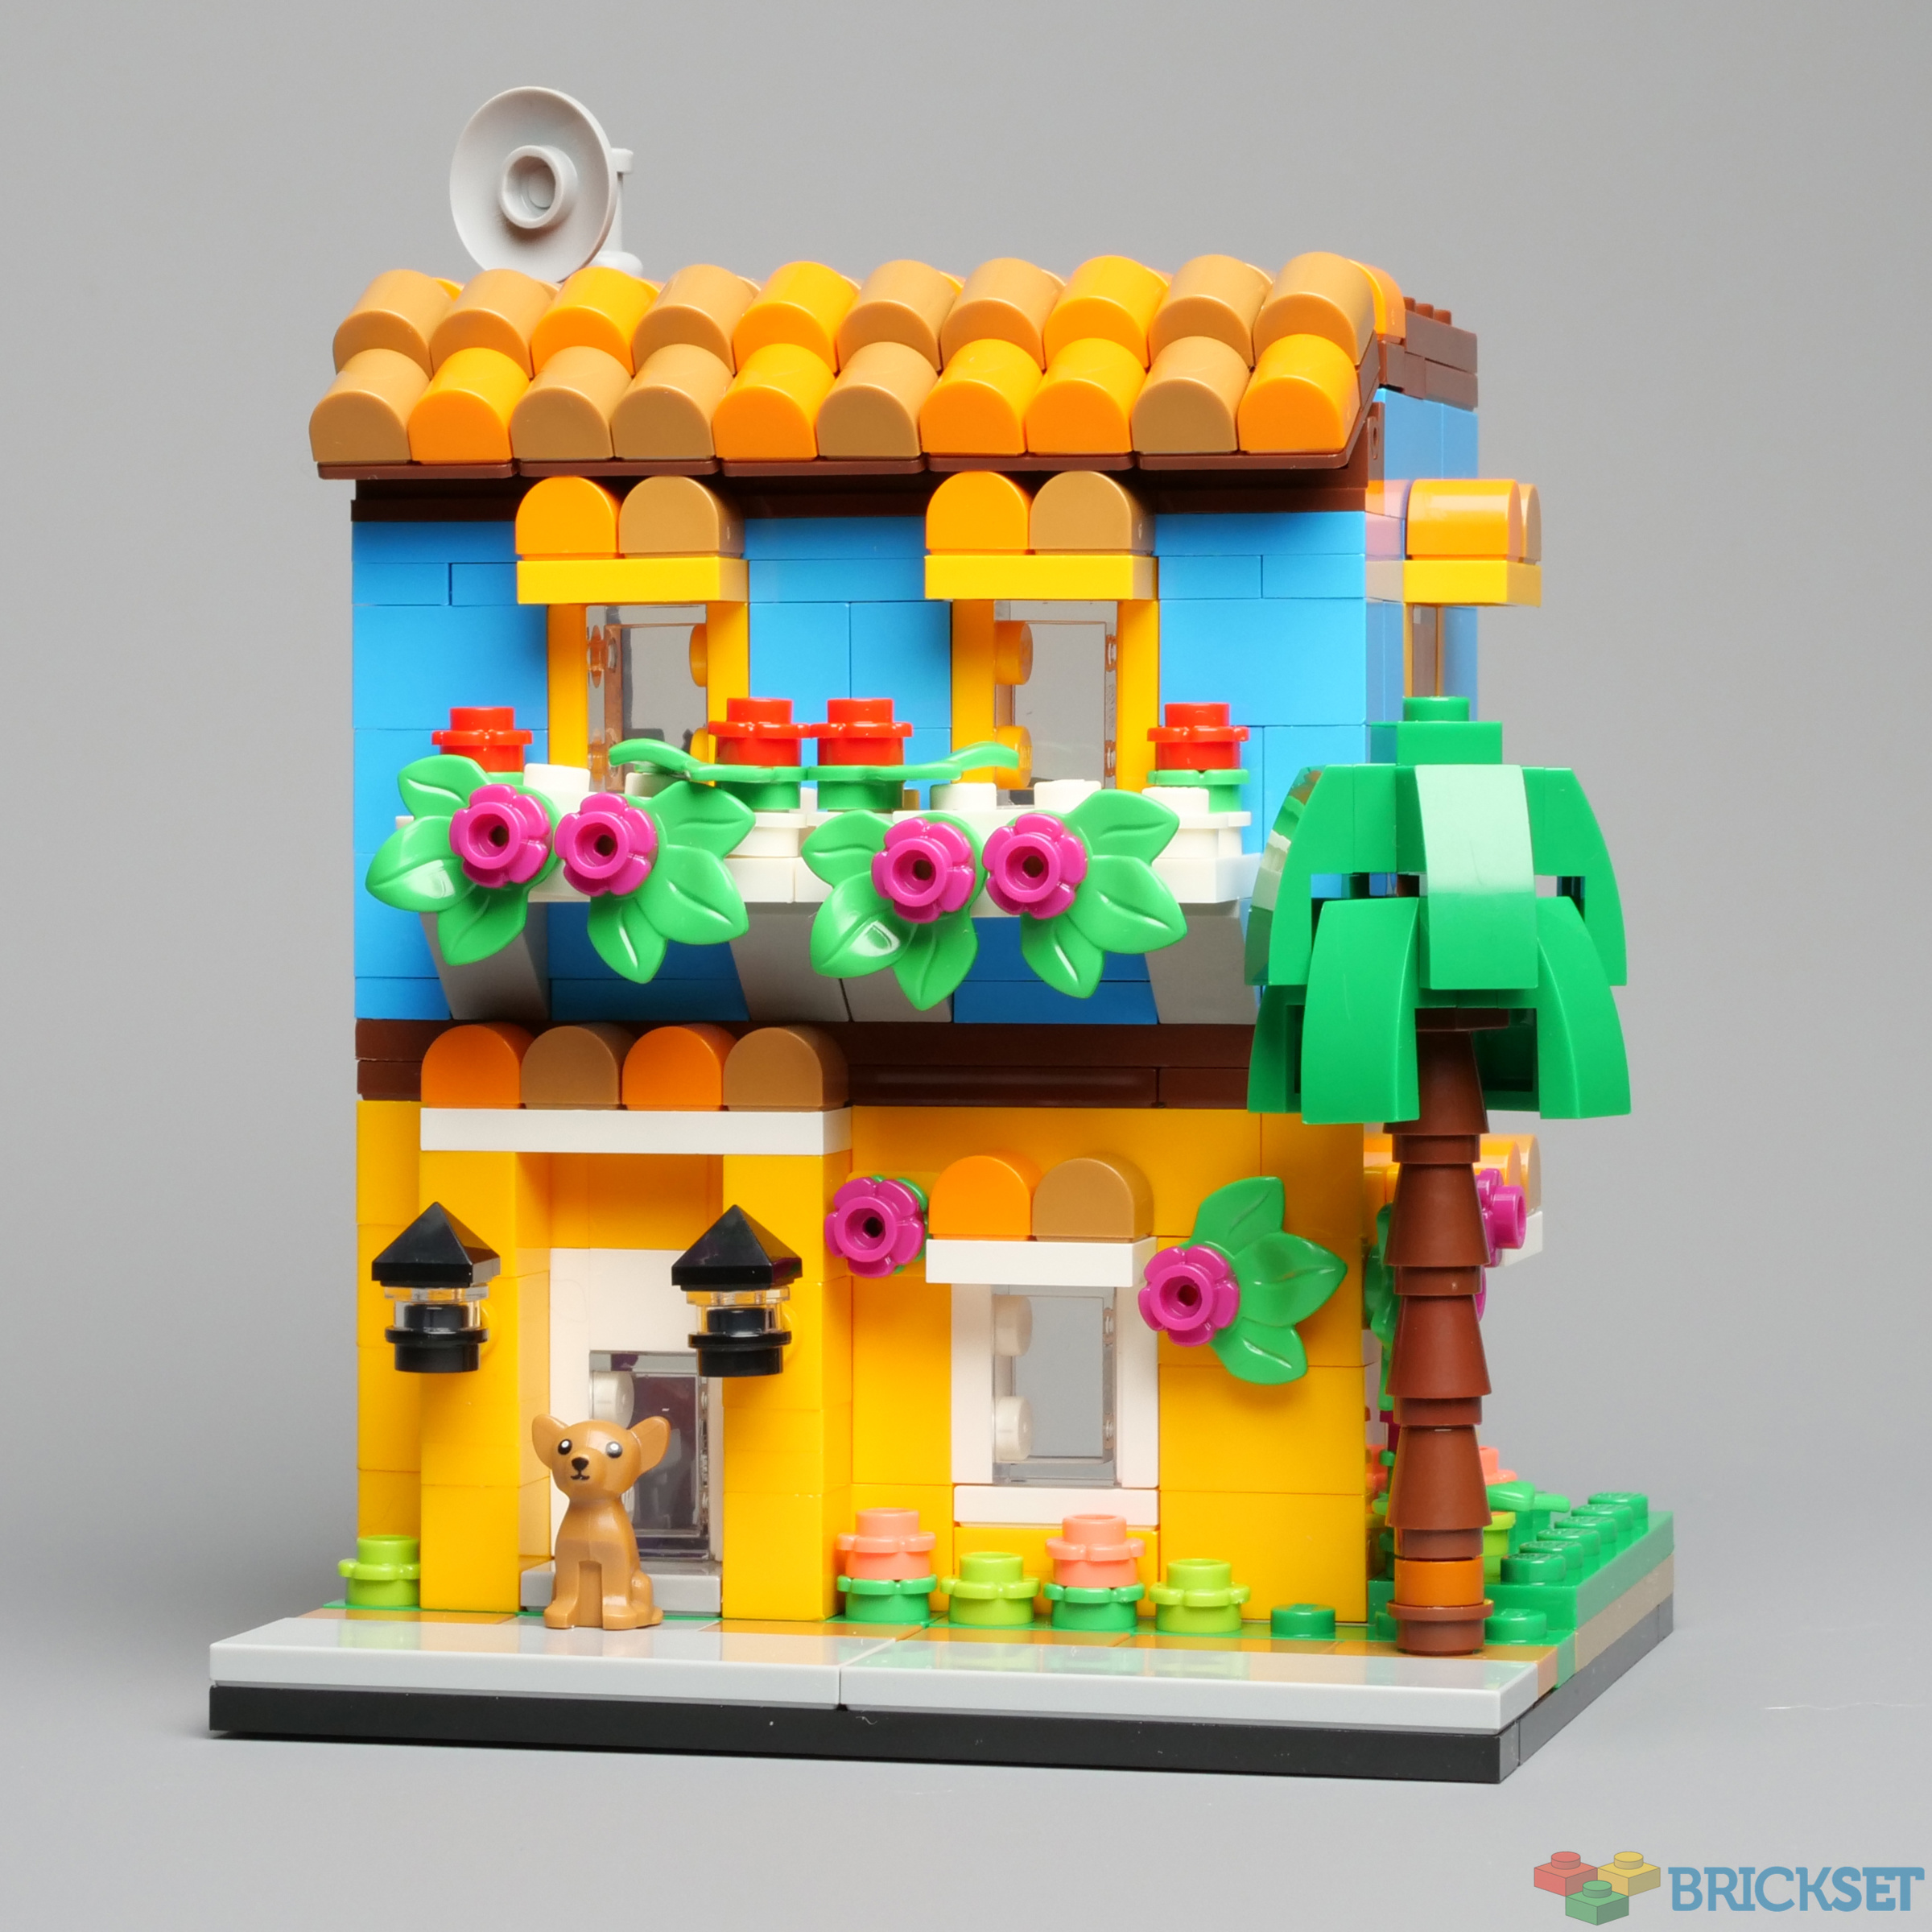 LEGO IDEAS - Japanese Traditional Neighborhood